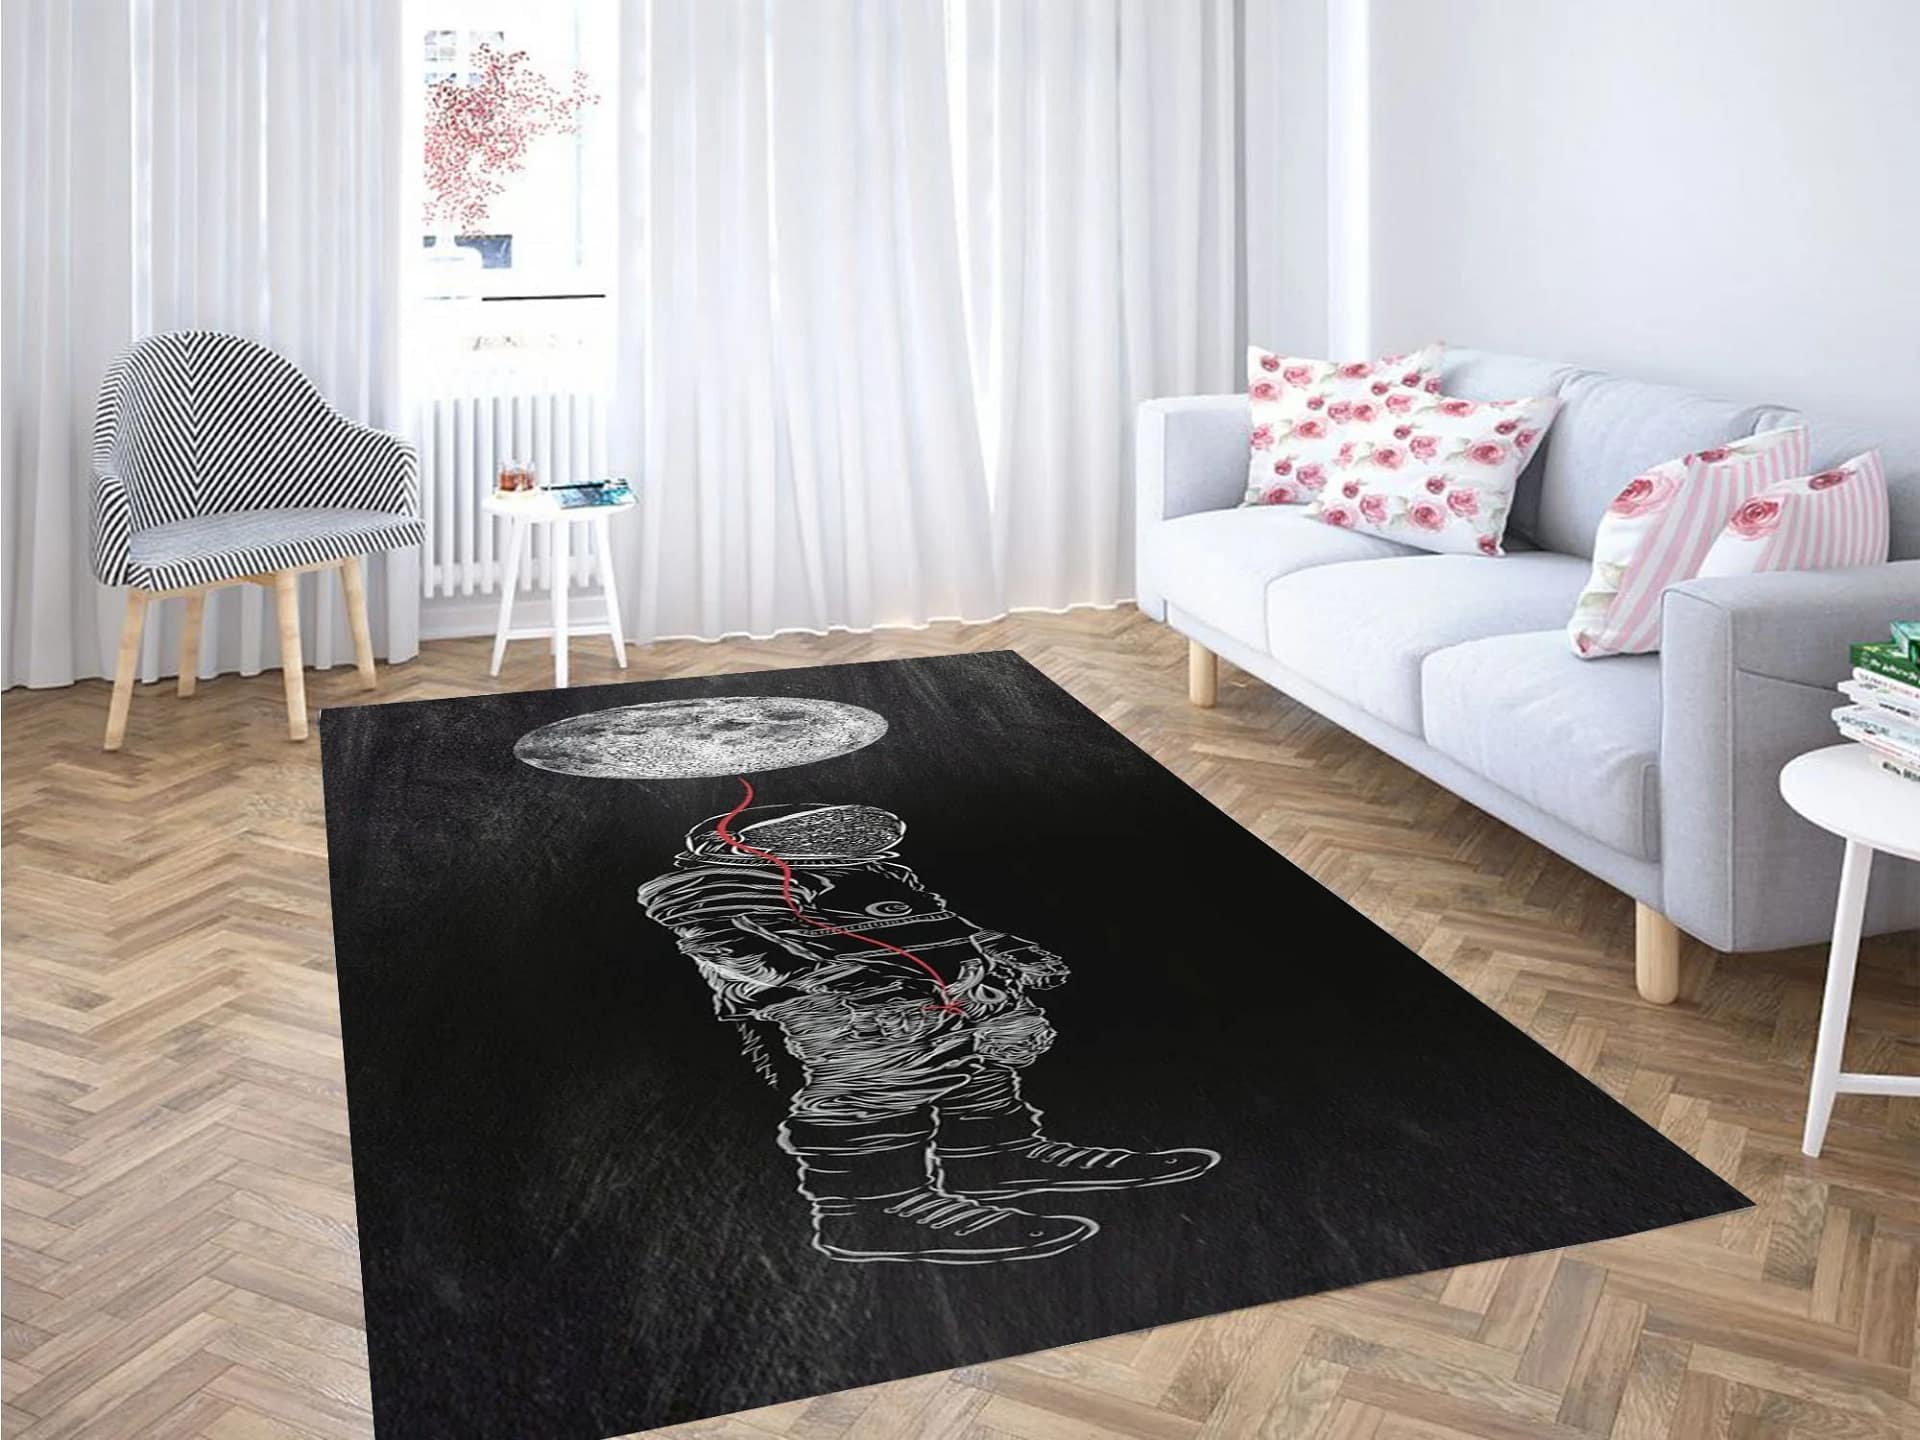 Astronaut Moon Art Backgrounds Carpet Rug